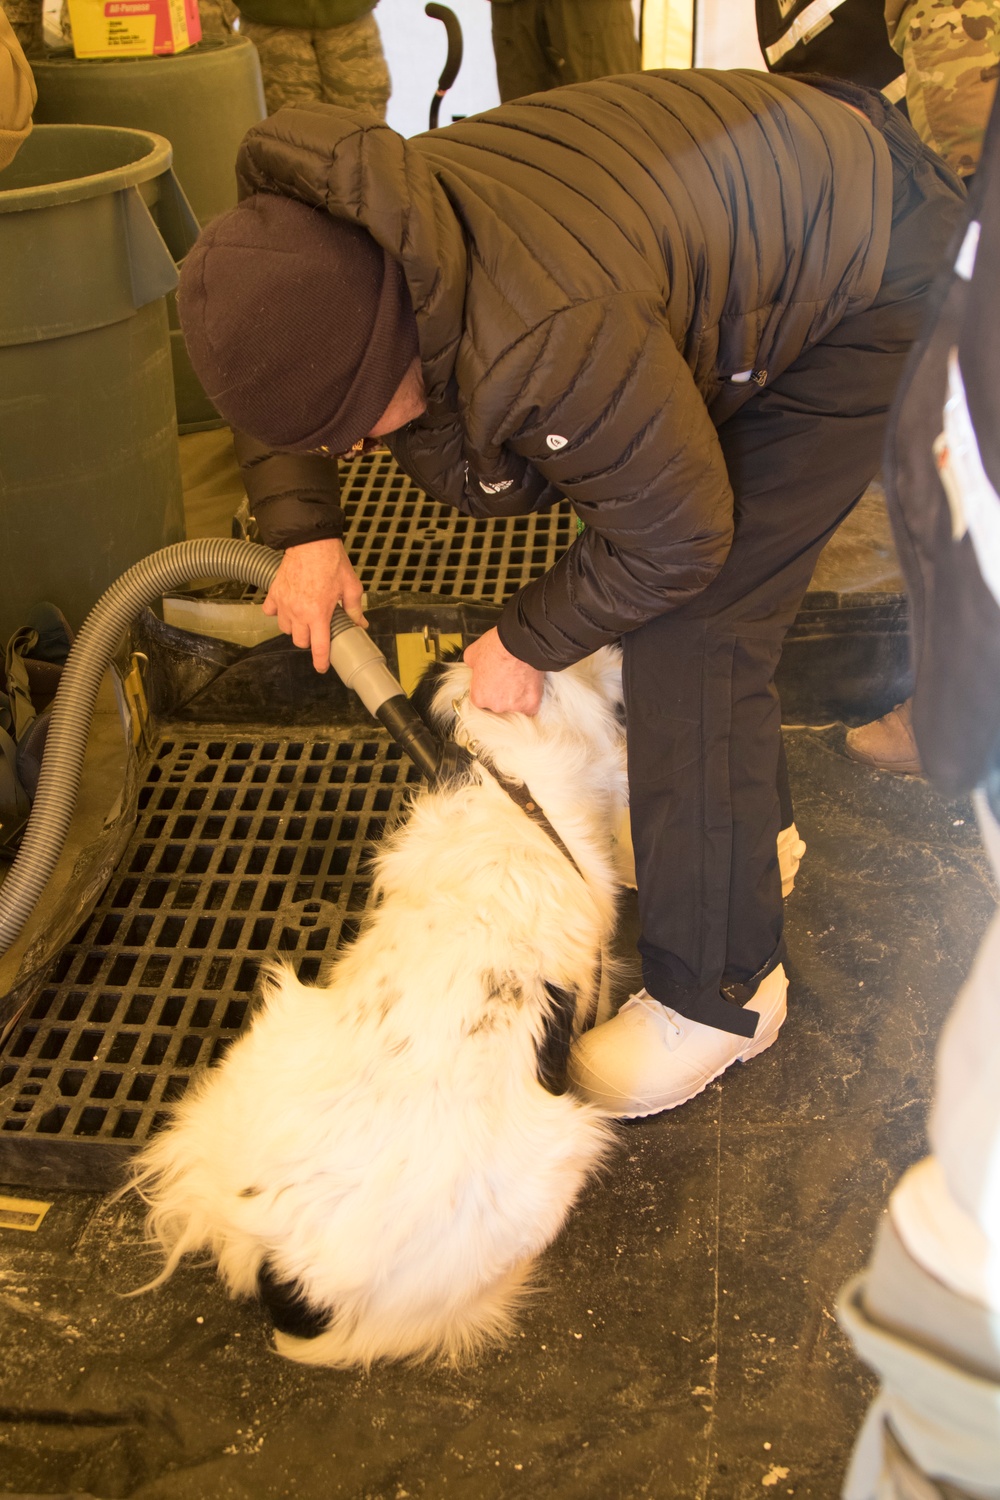 Search and extraction teams practice decontamination procedures in Arctic Eagle 2020